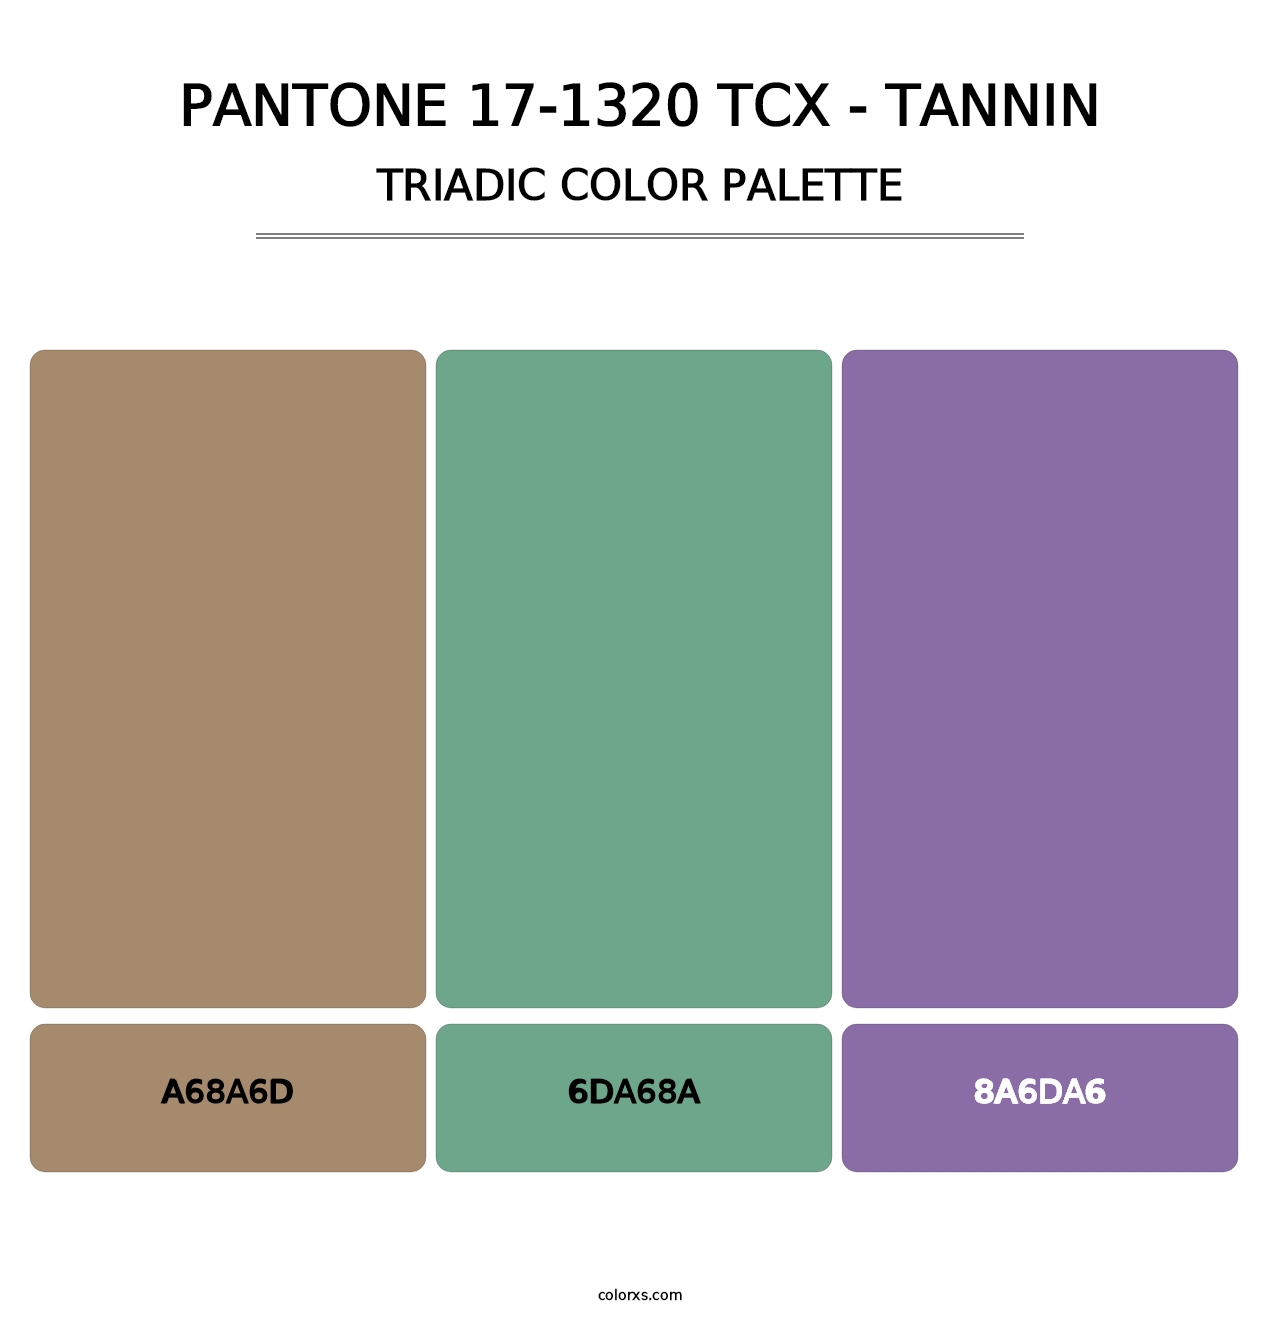 PANTONE 17-1320 TCX - Tannin - Triadic Color Palette